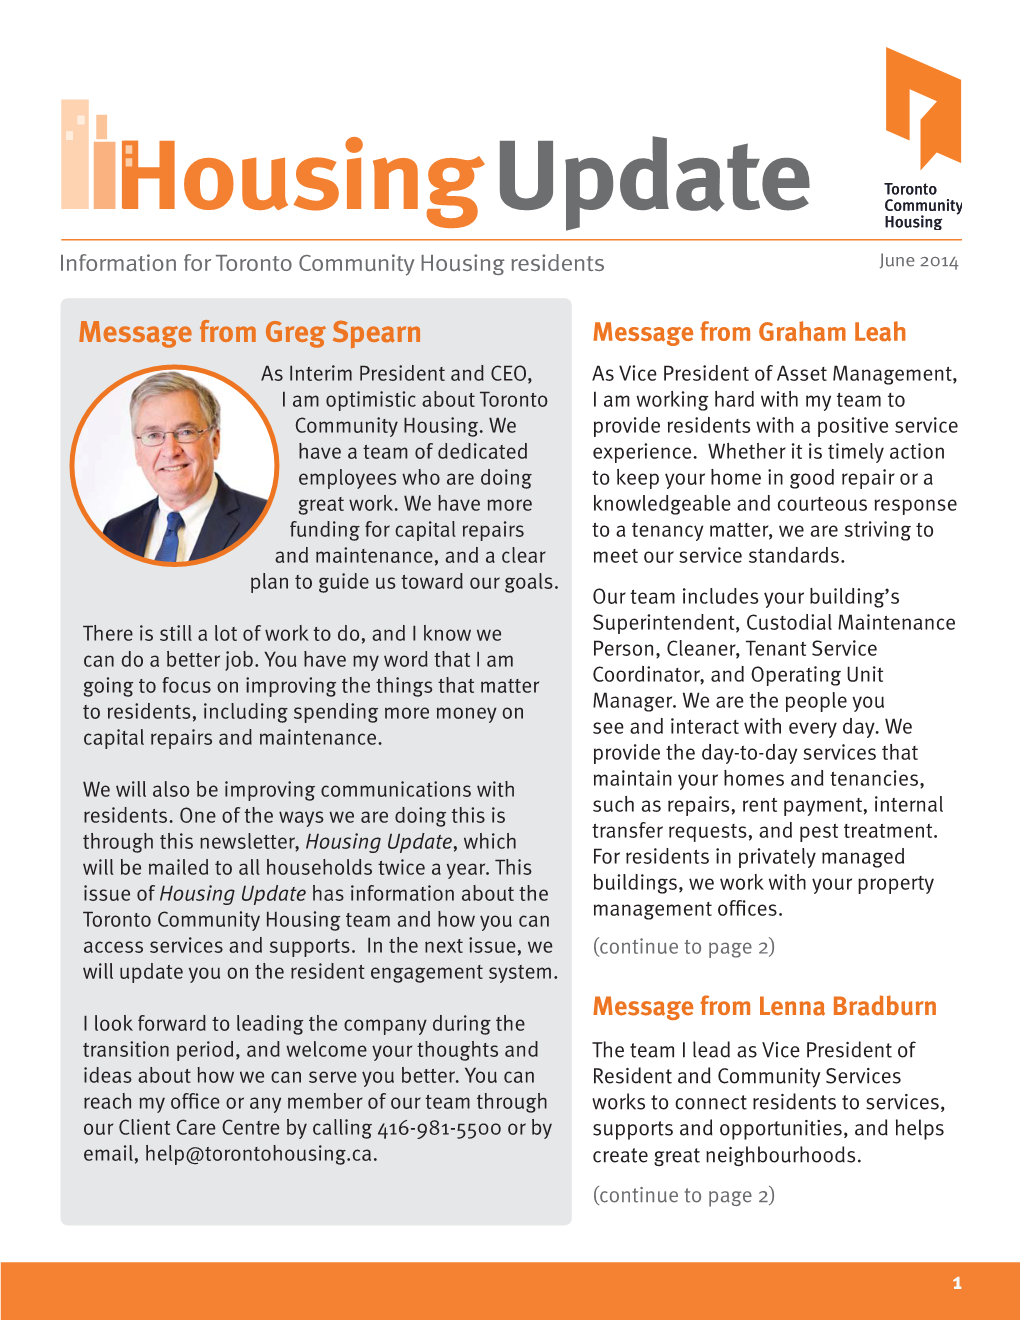 Housing Update June 2014